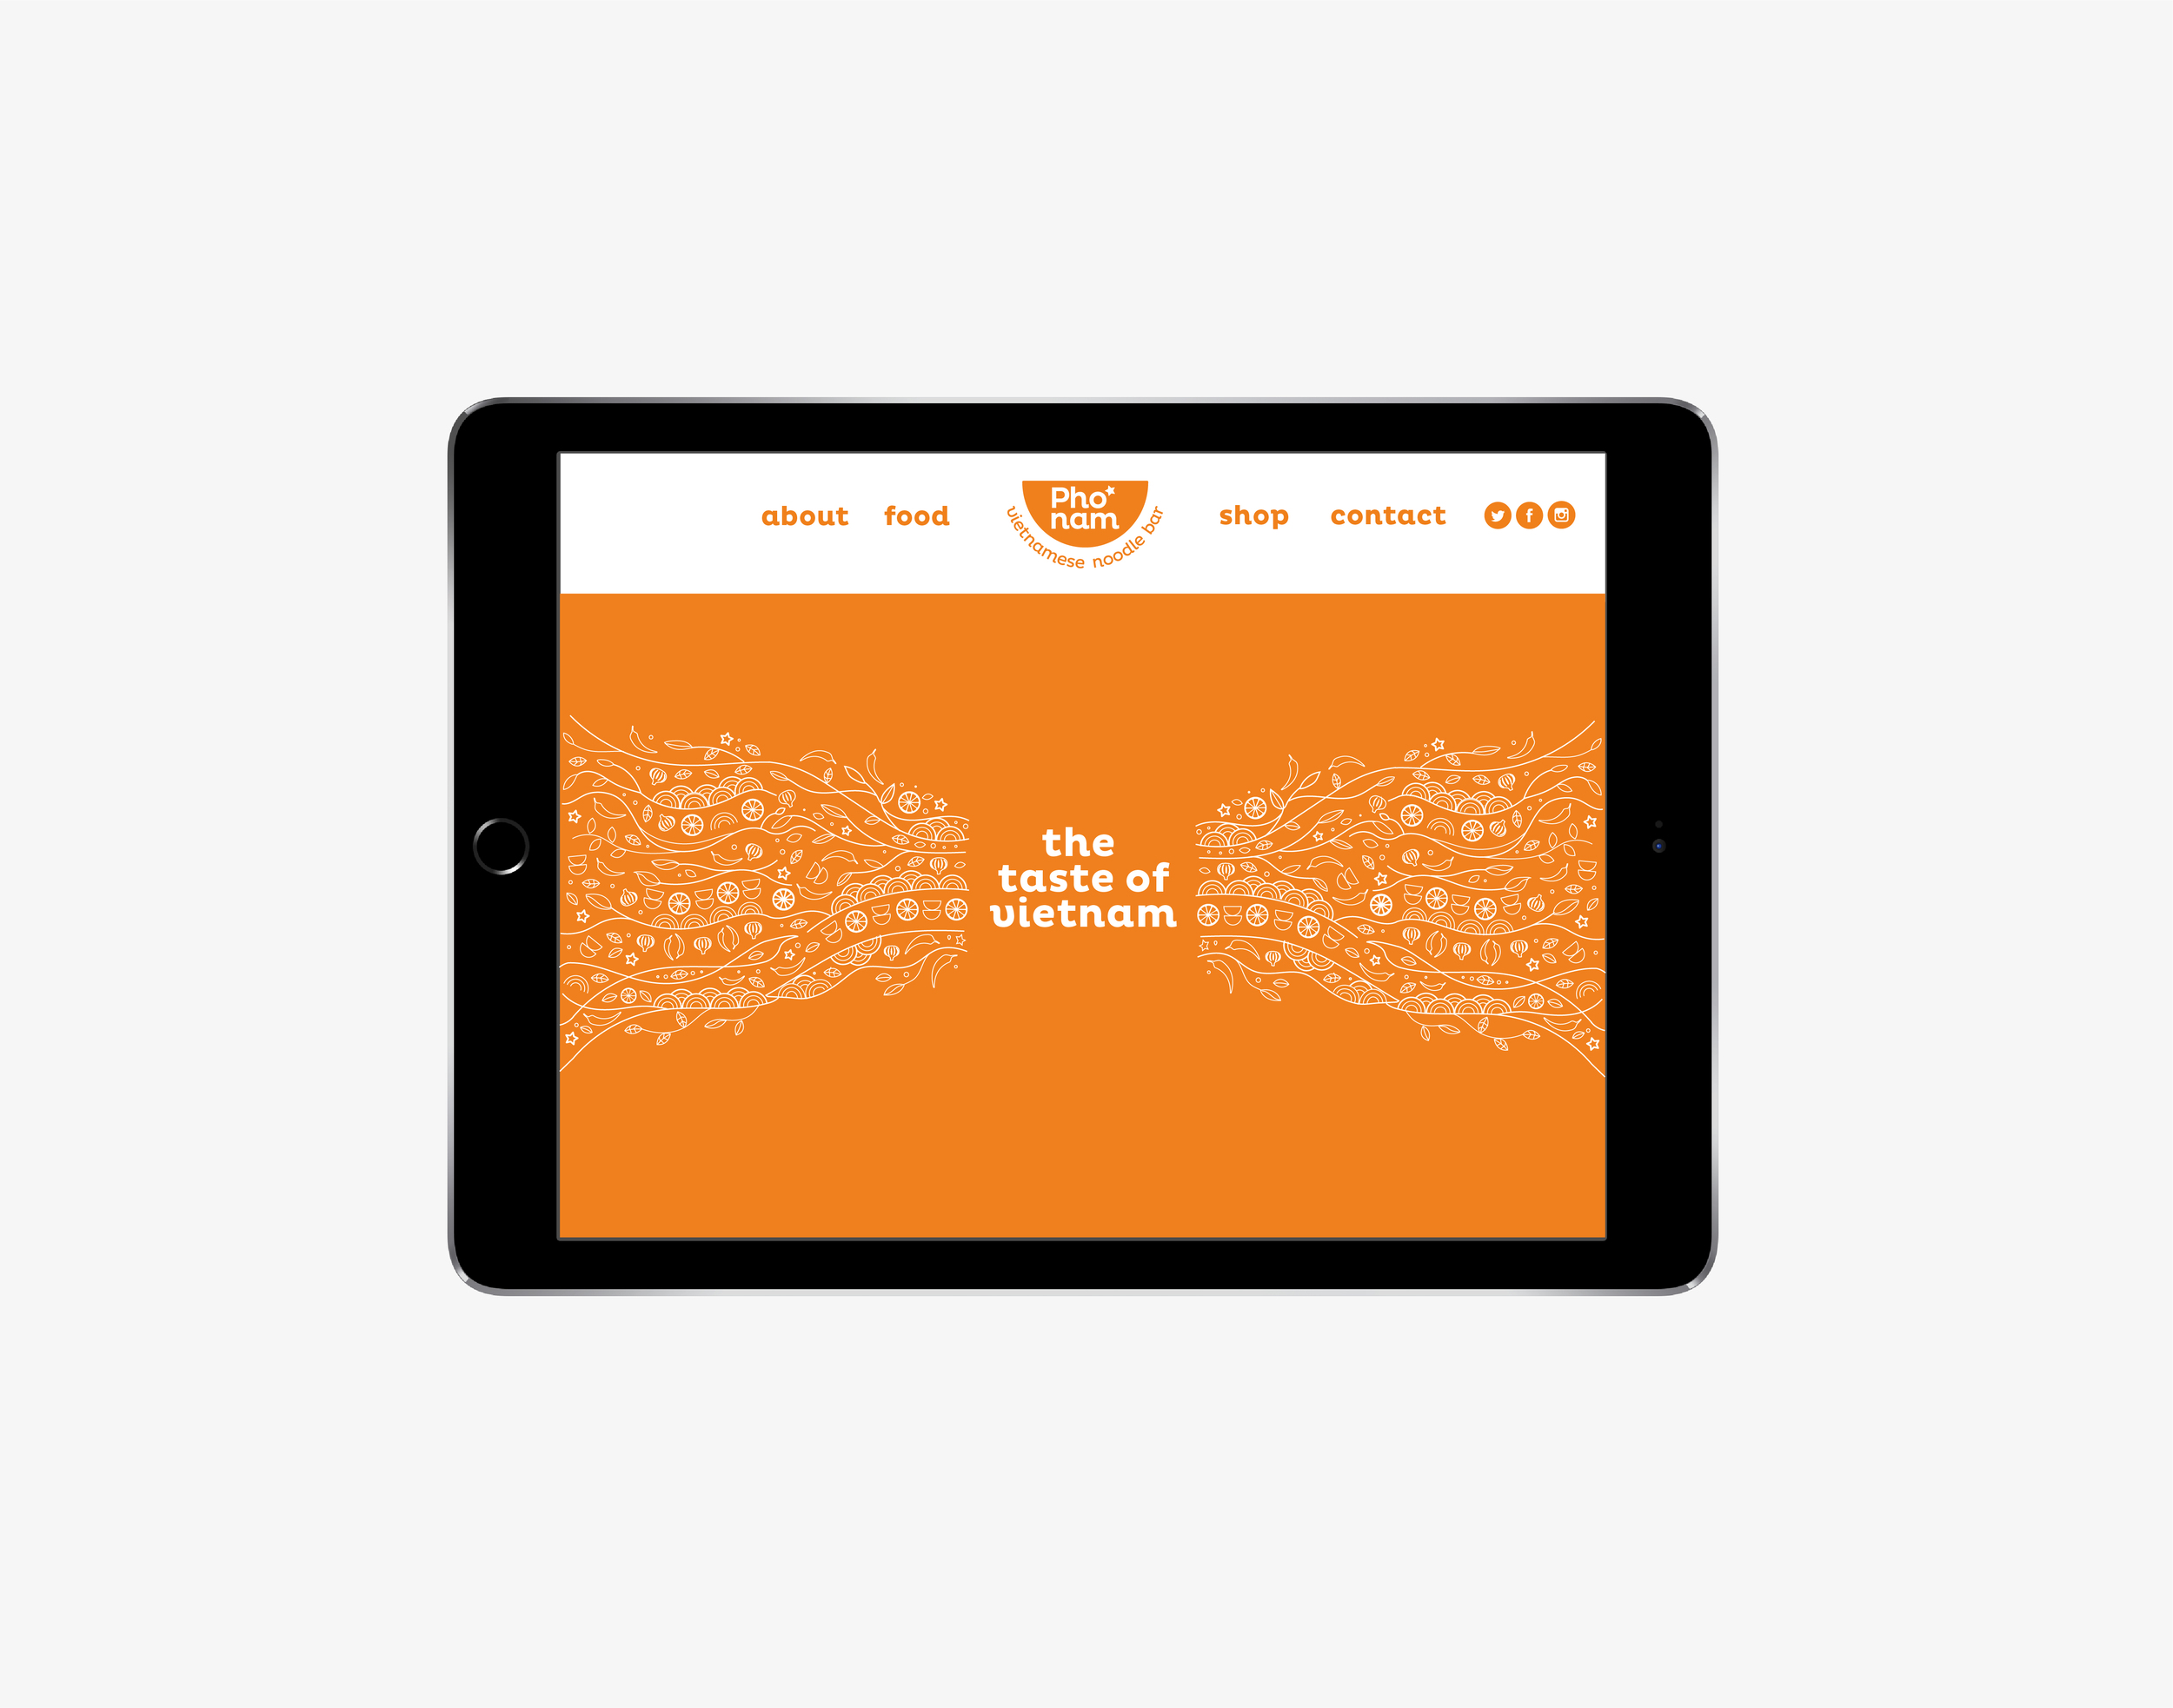 Freelance-graphic-designer-An Apple iPad showing Pho Nam website homepage design